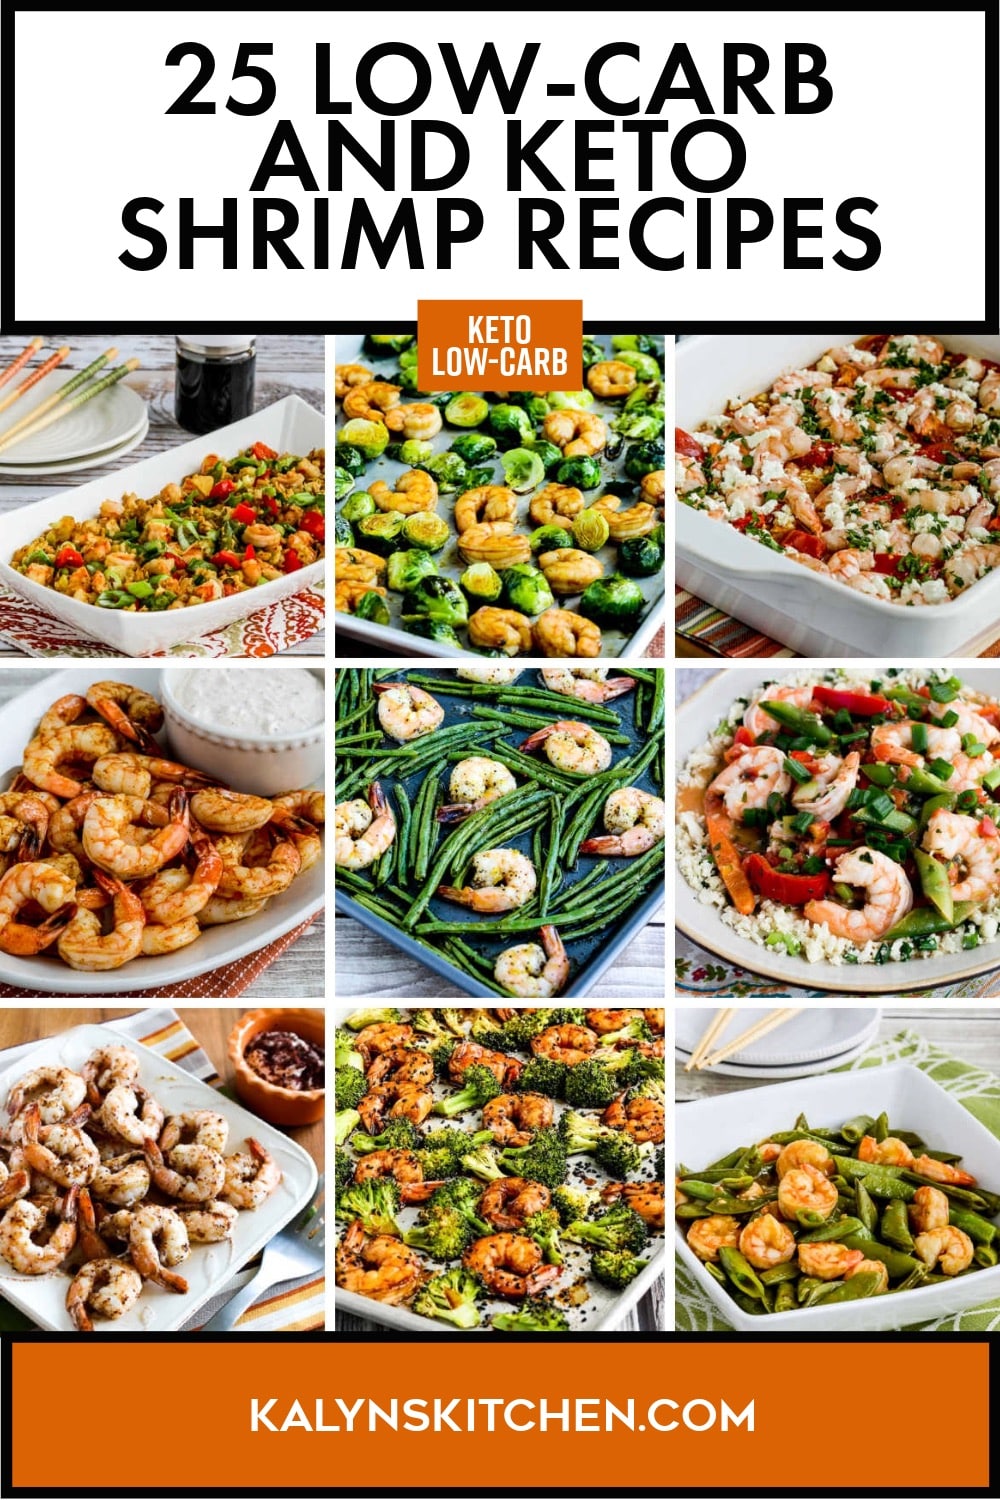 Pinterest image of 25 Low-Carb and Keto Shrimp Recipes